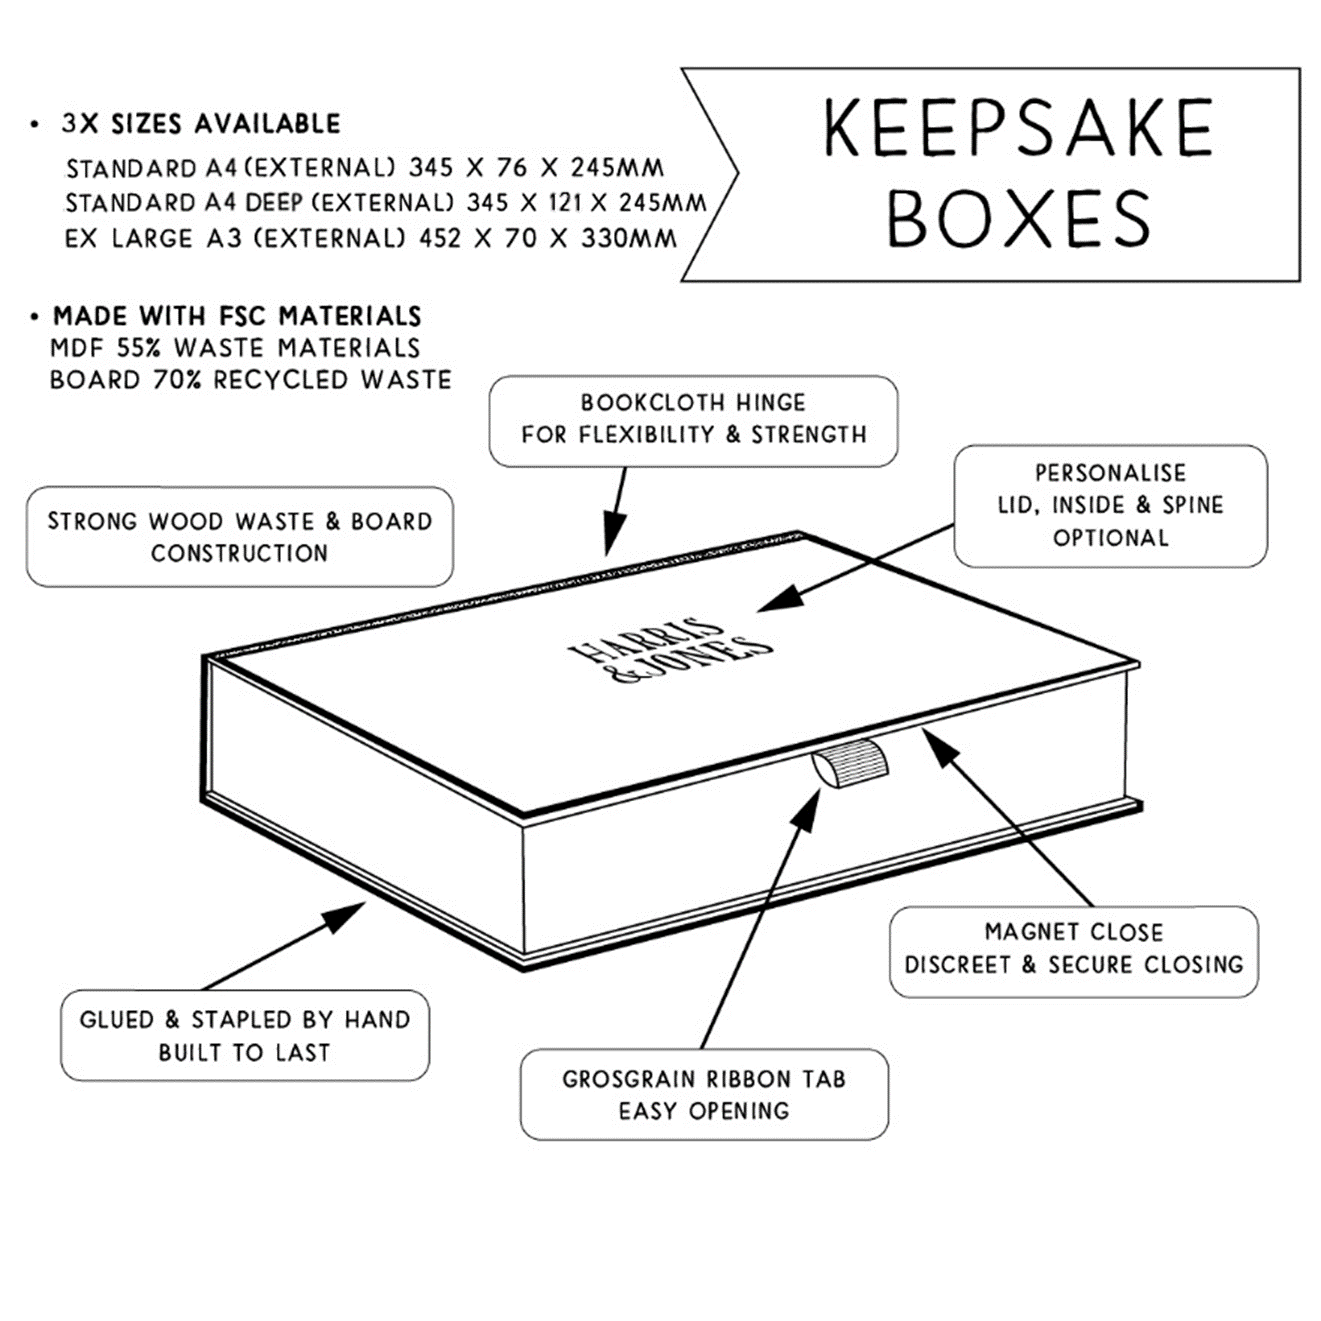 Classic Keepsake Boxes